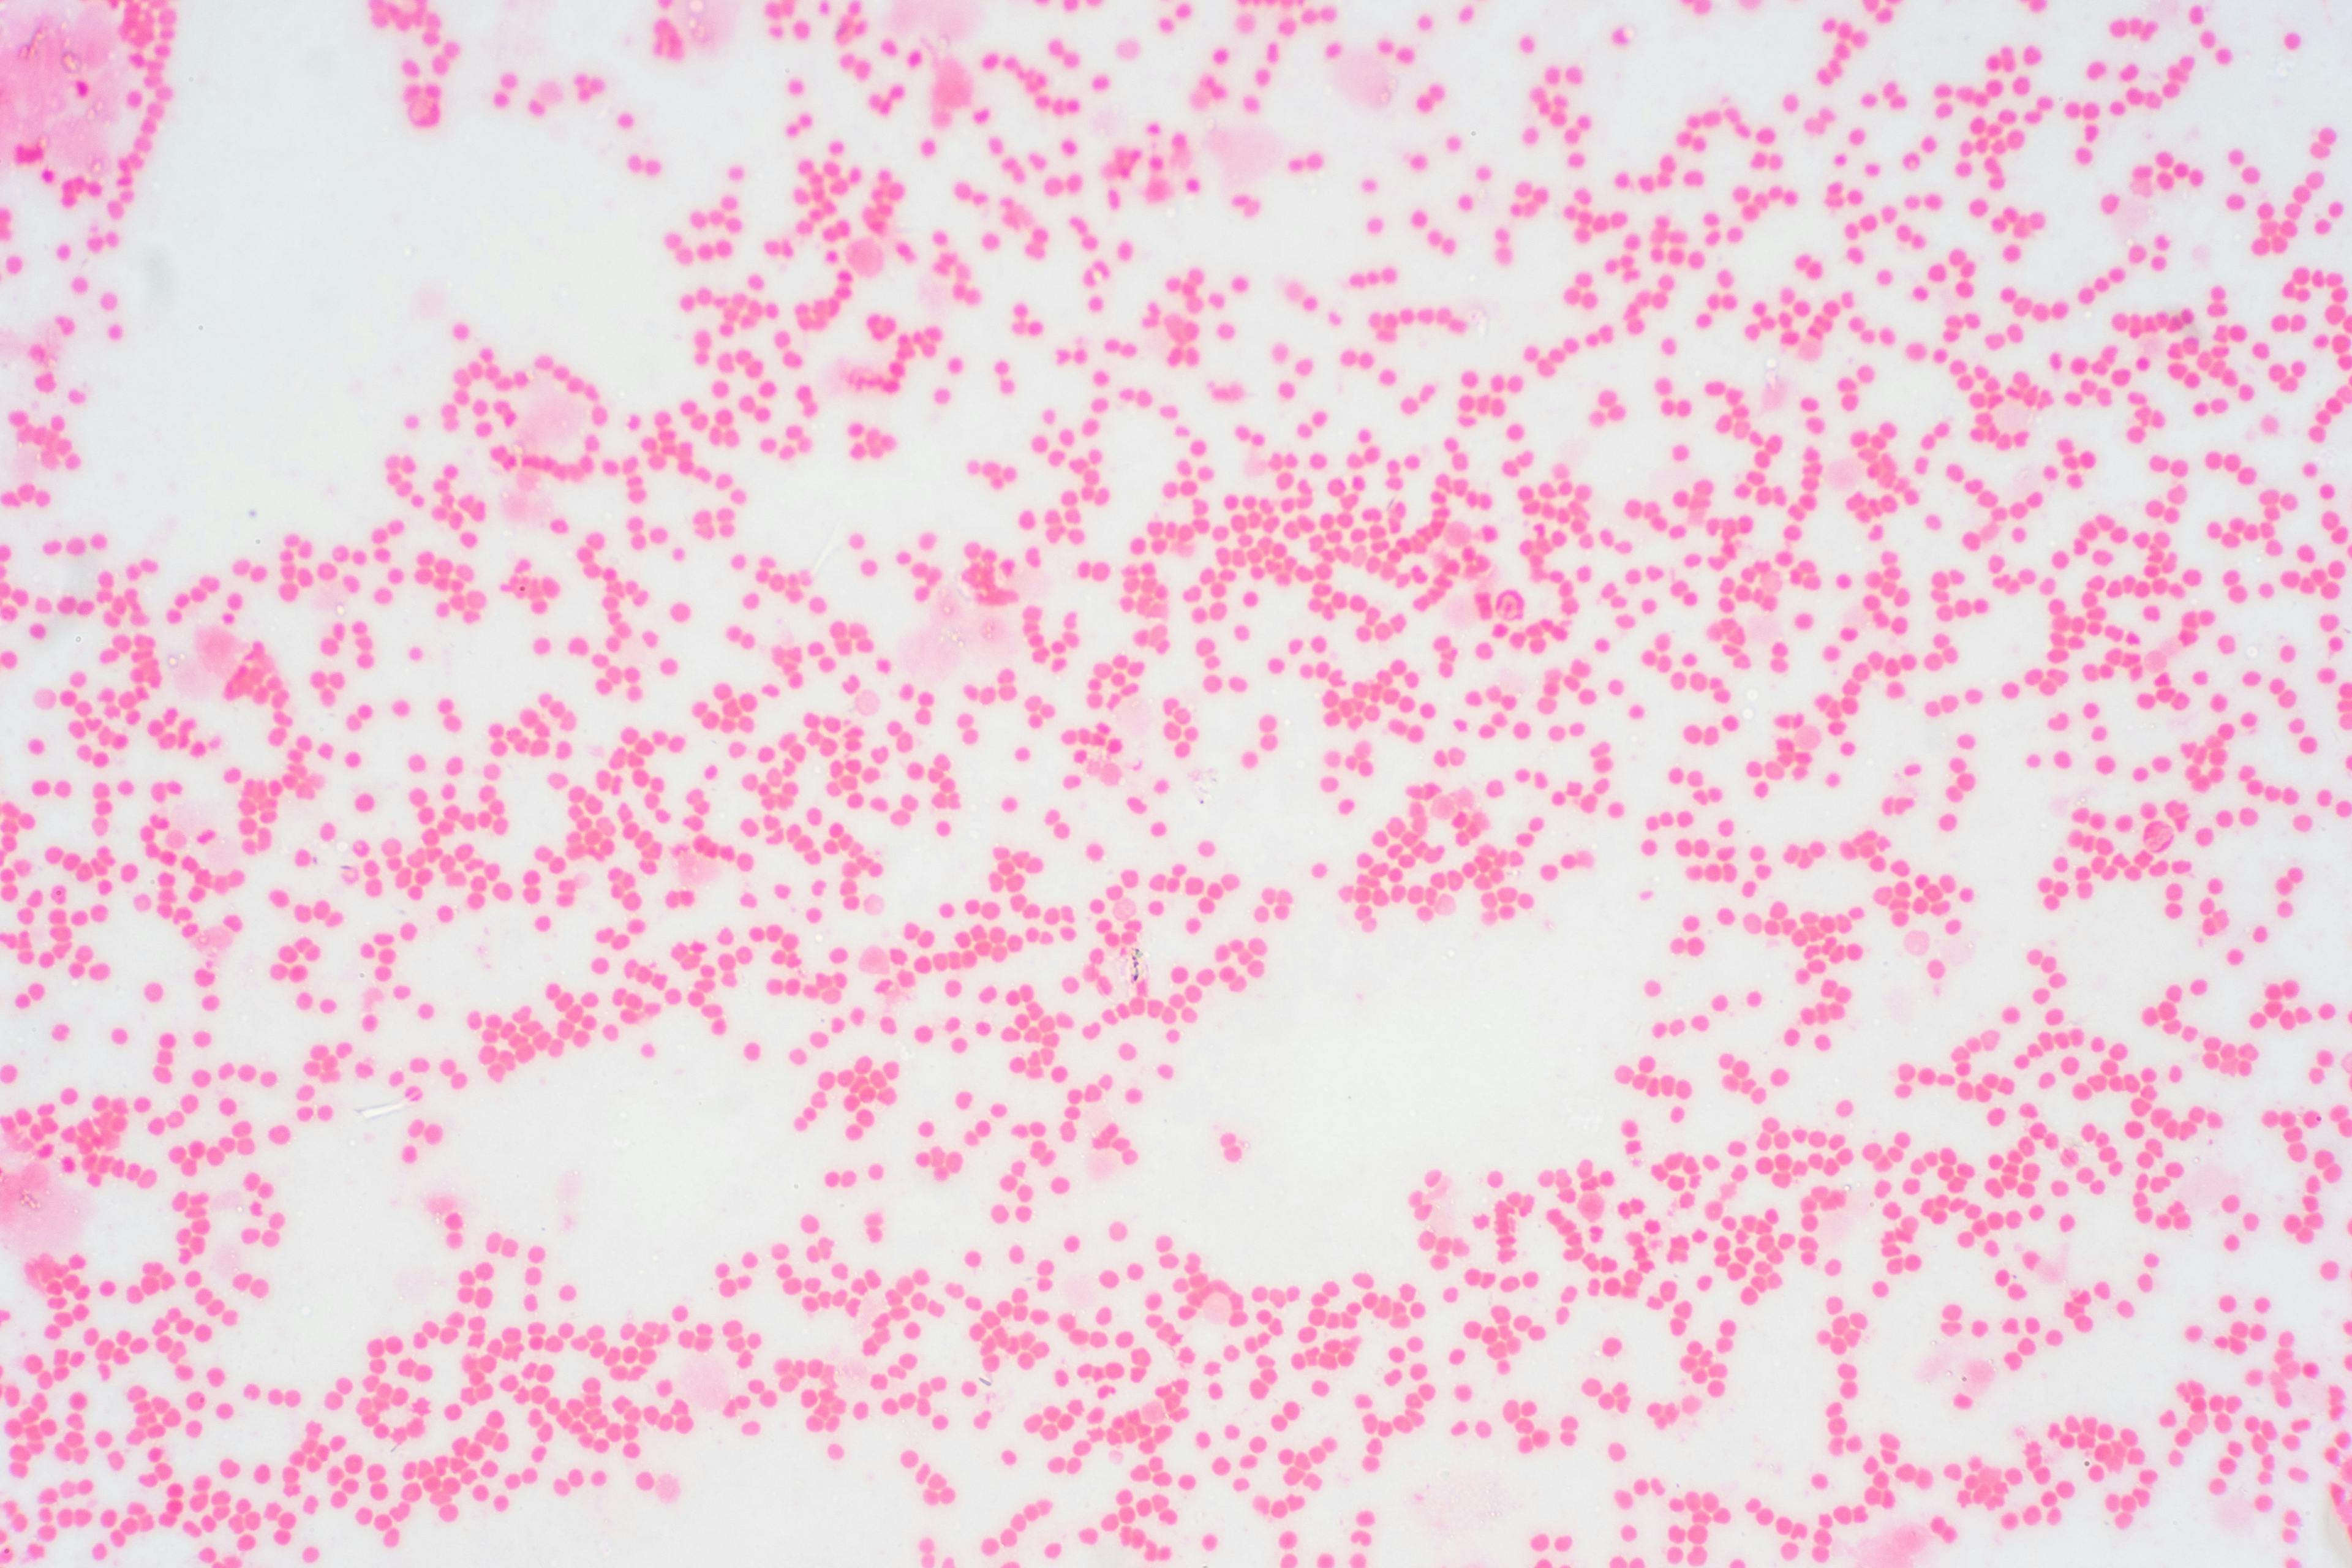 Bone marrow biopsy from myelodysplastic condition under the microscope view. | Image Credit: © tonaquatic - www.stock.adobe.com